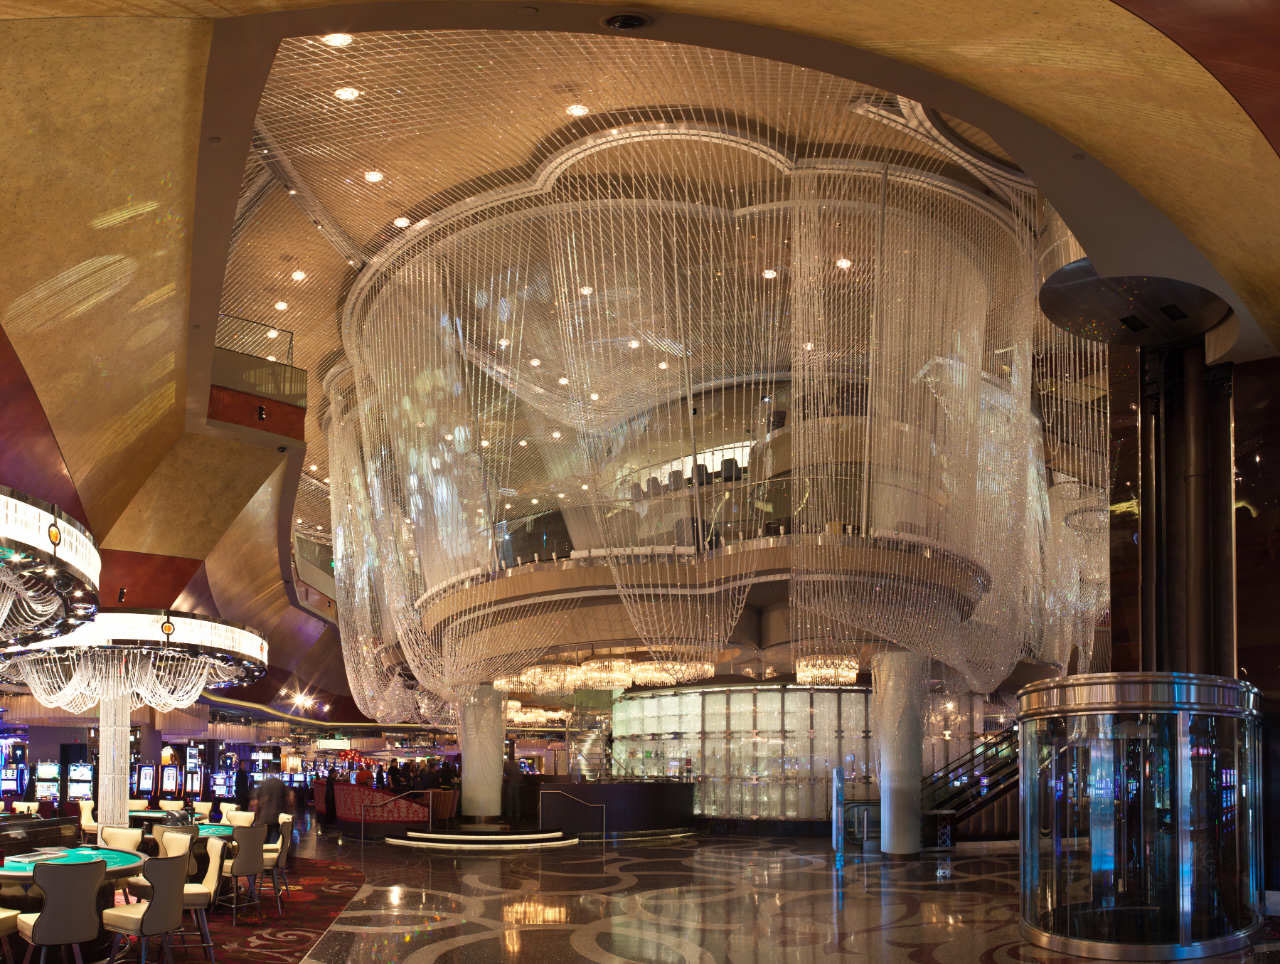 Swanky Hotel Interior Design The Cosmopolitan Of Las Vegas